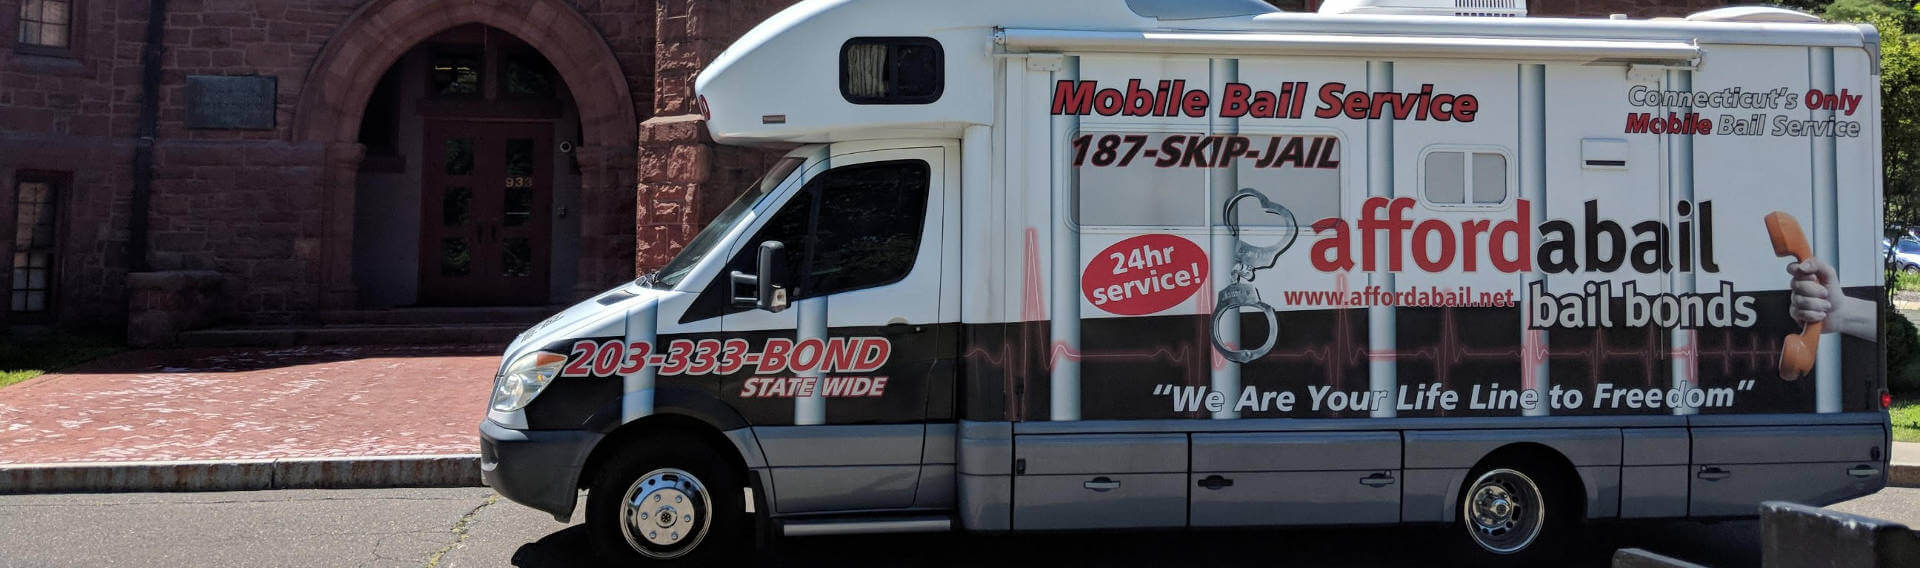 Mobile bail bonds service in Newington CT